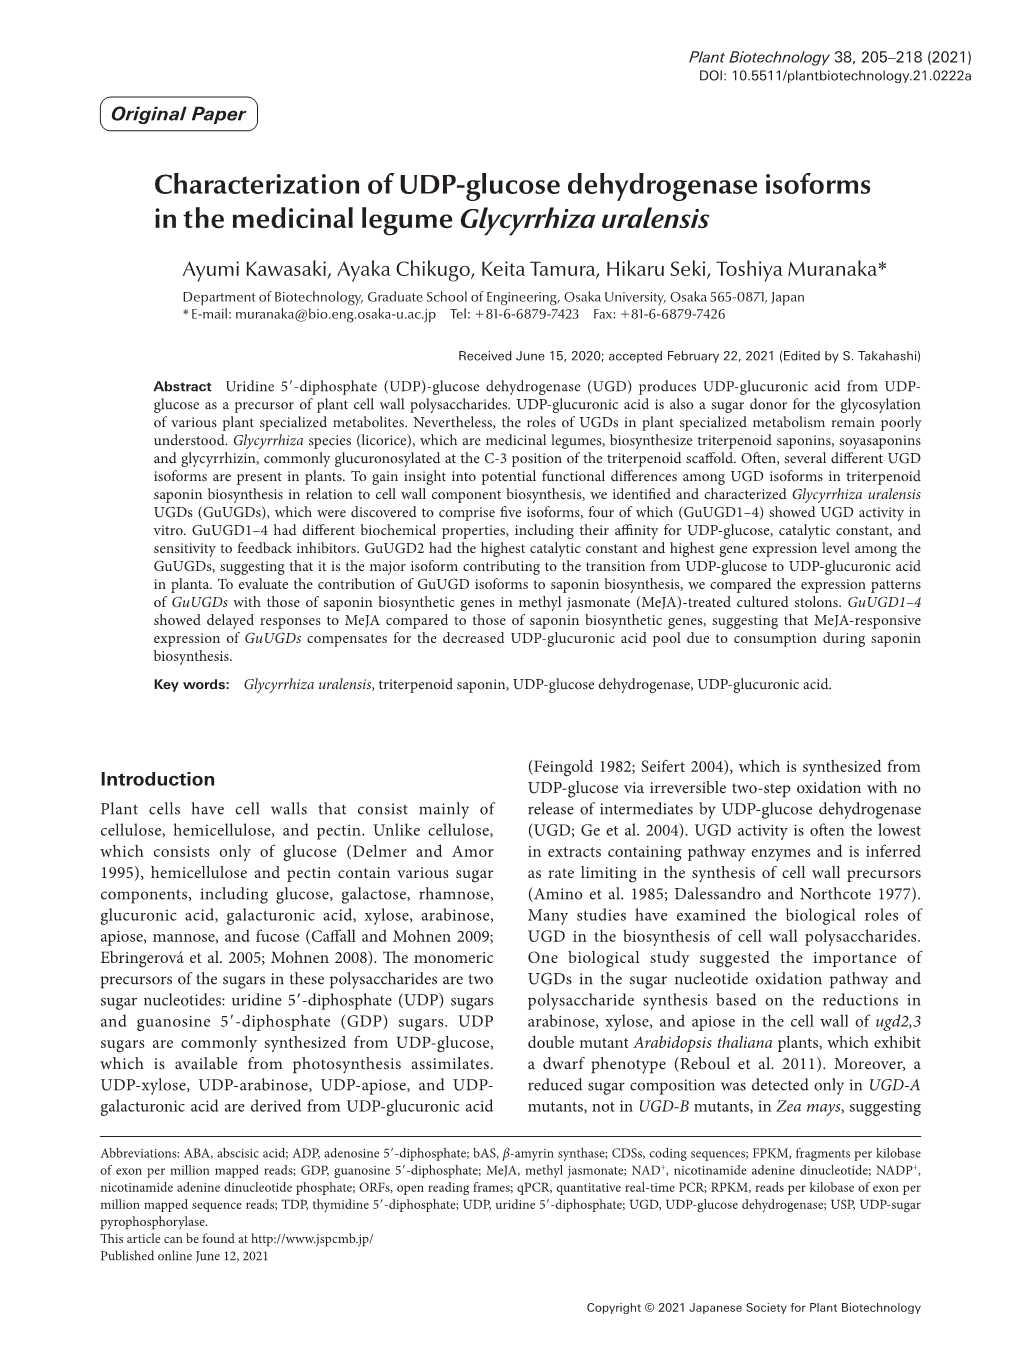 Characterization of UDP-Glucose Dehydrogenase Isoforms in the Medicinal Legume Glycyrrhiza Uralensis